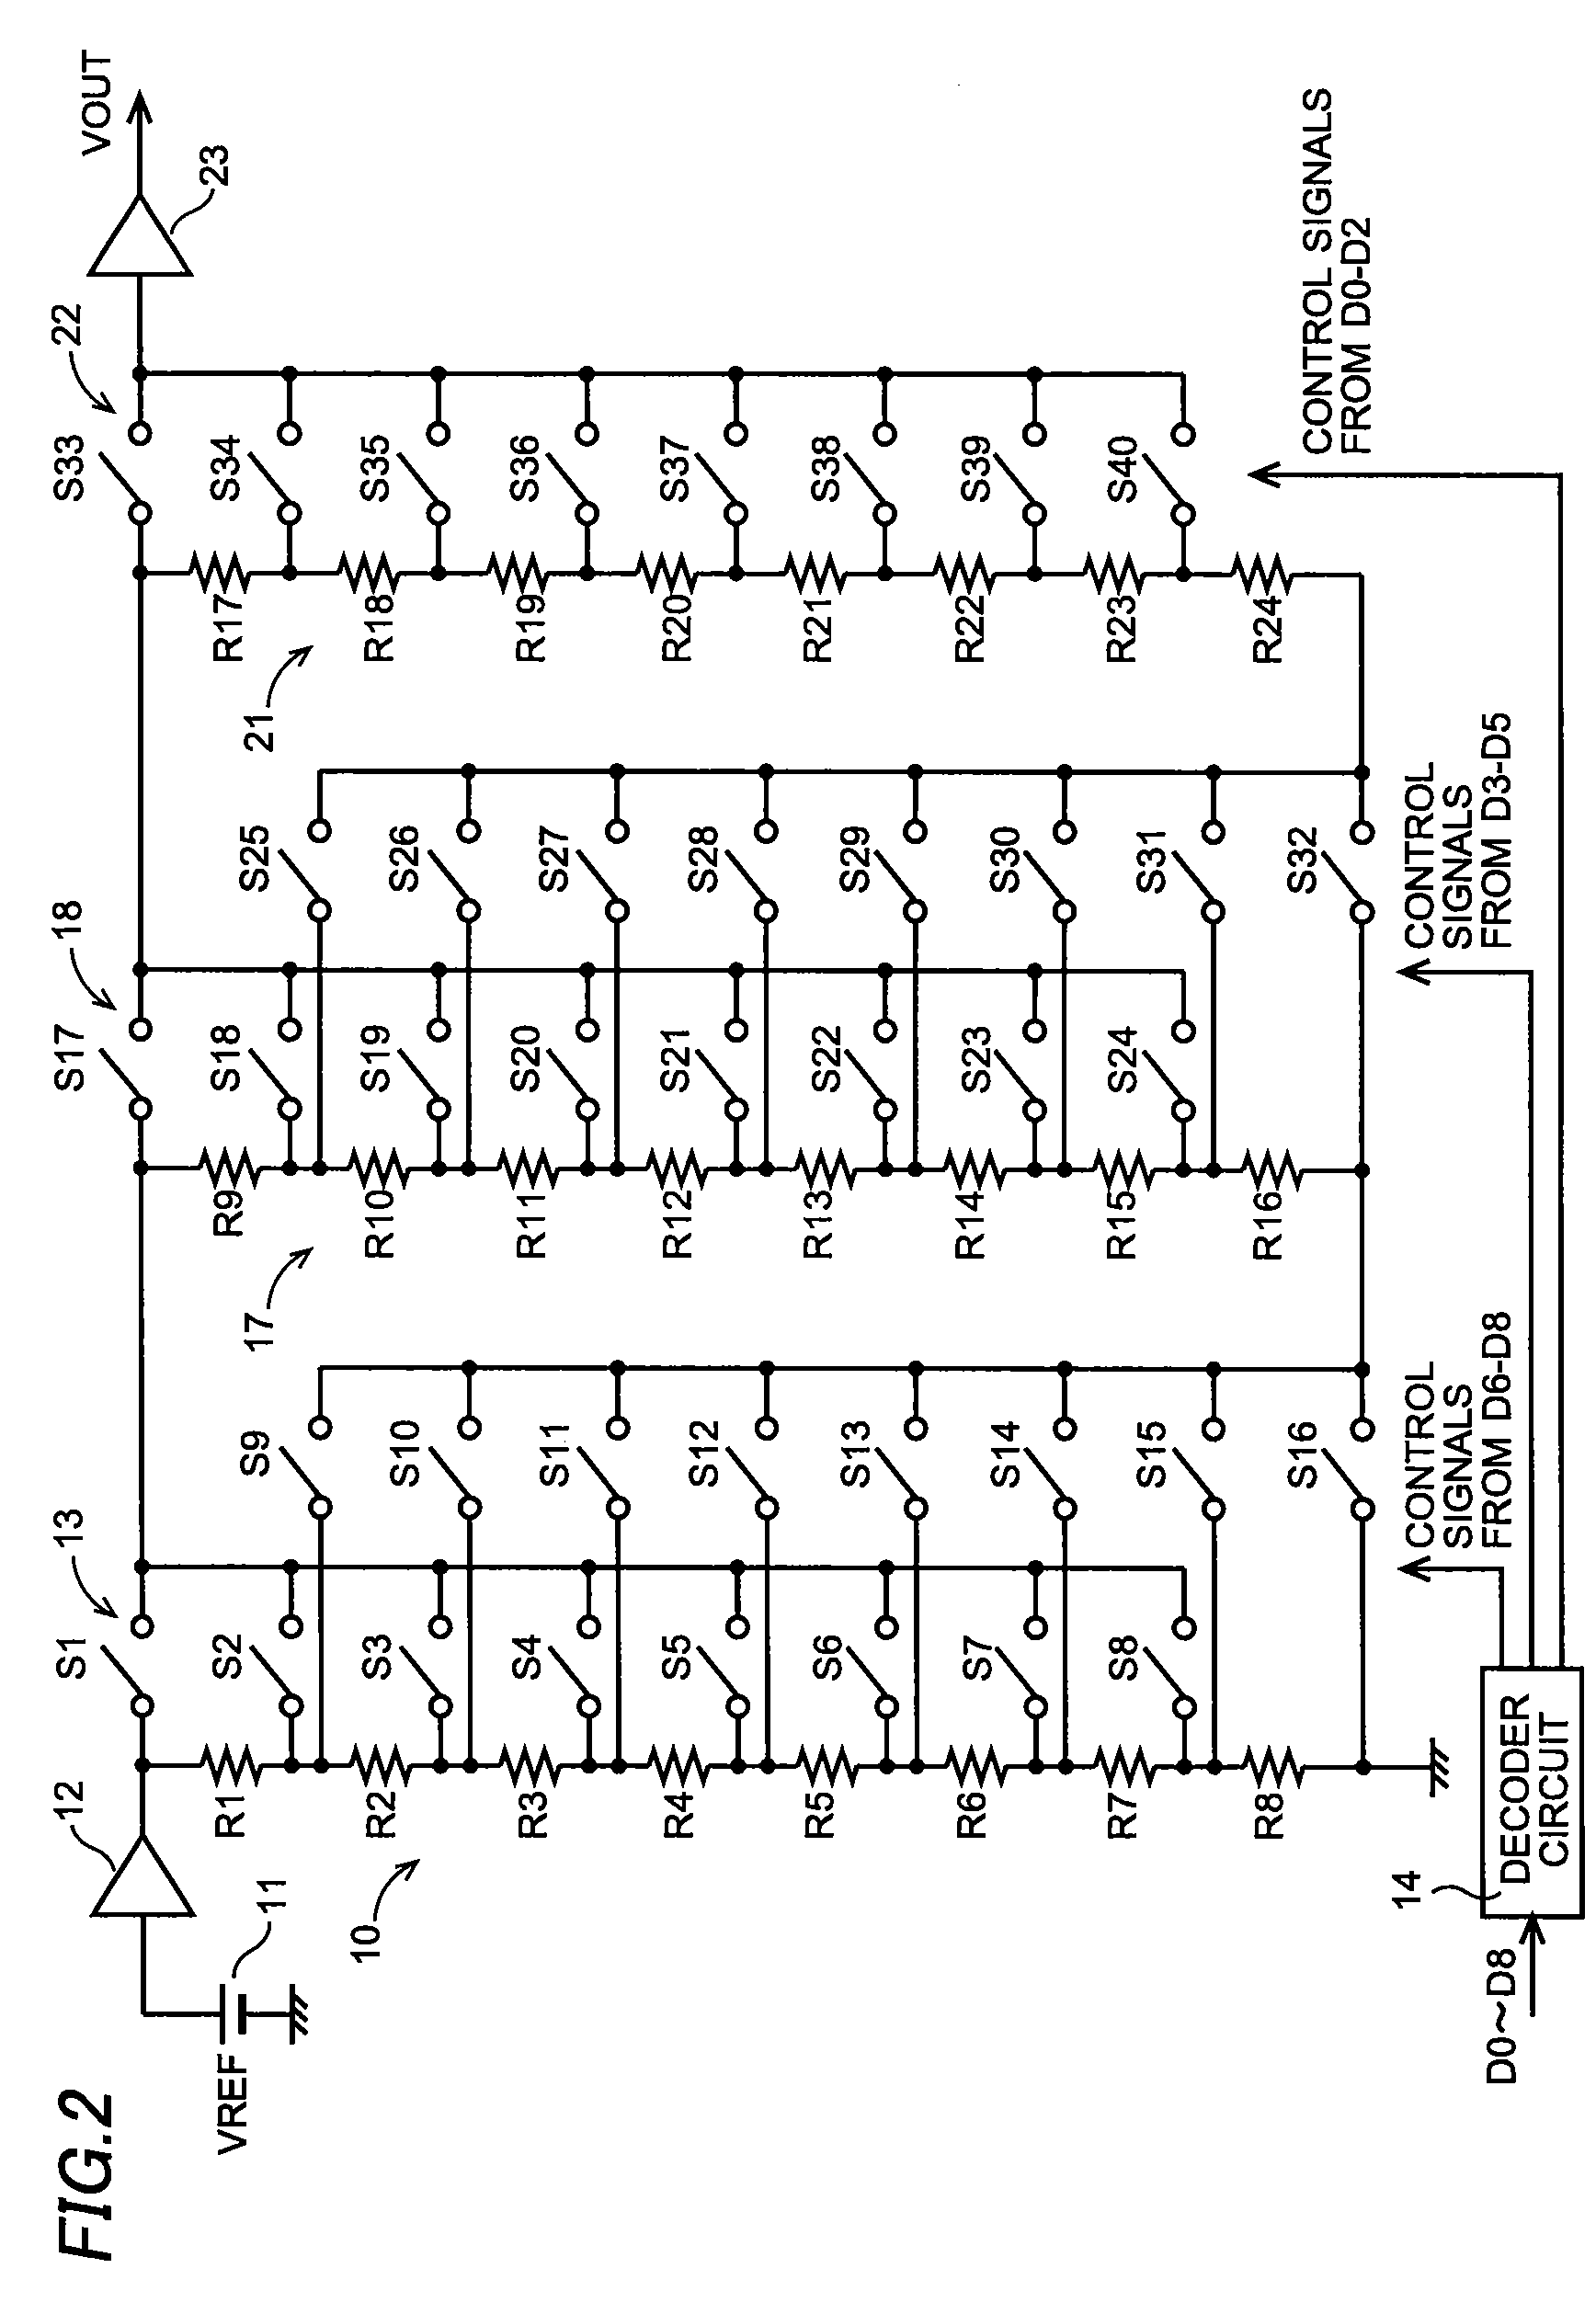 D/A converter circuit